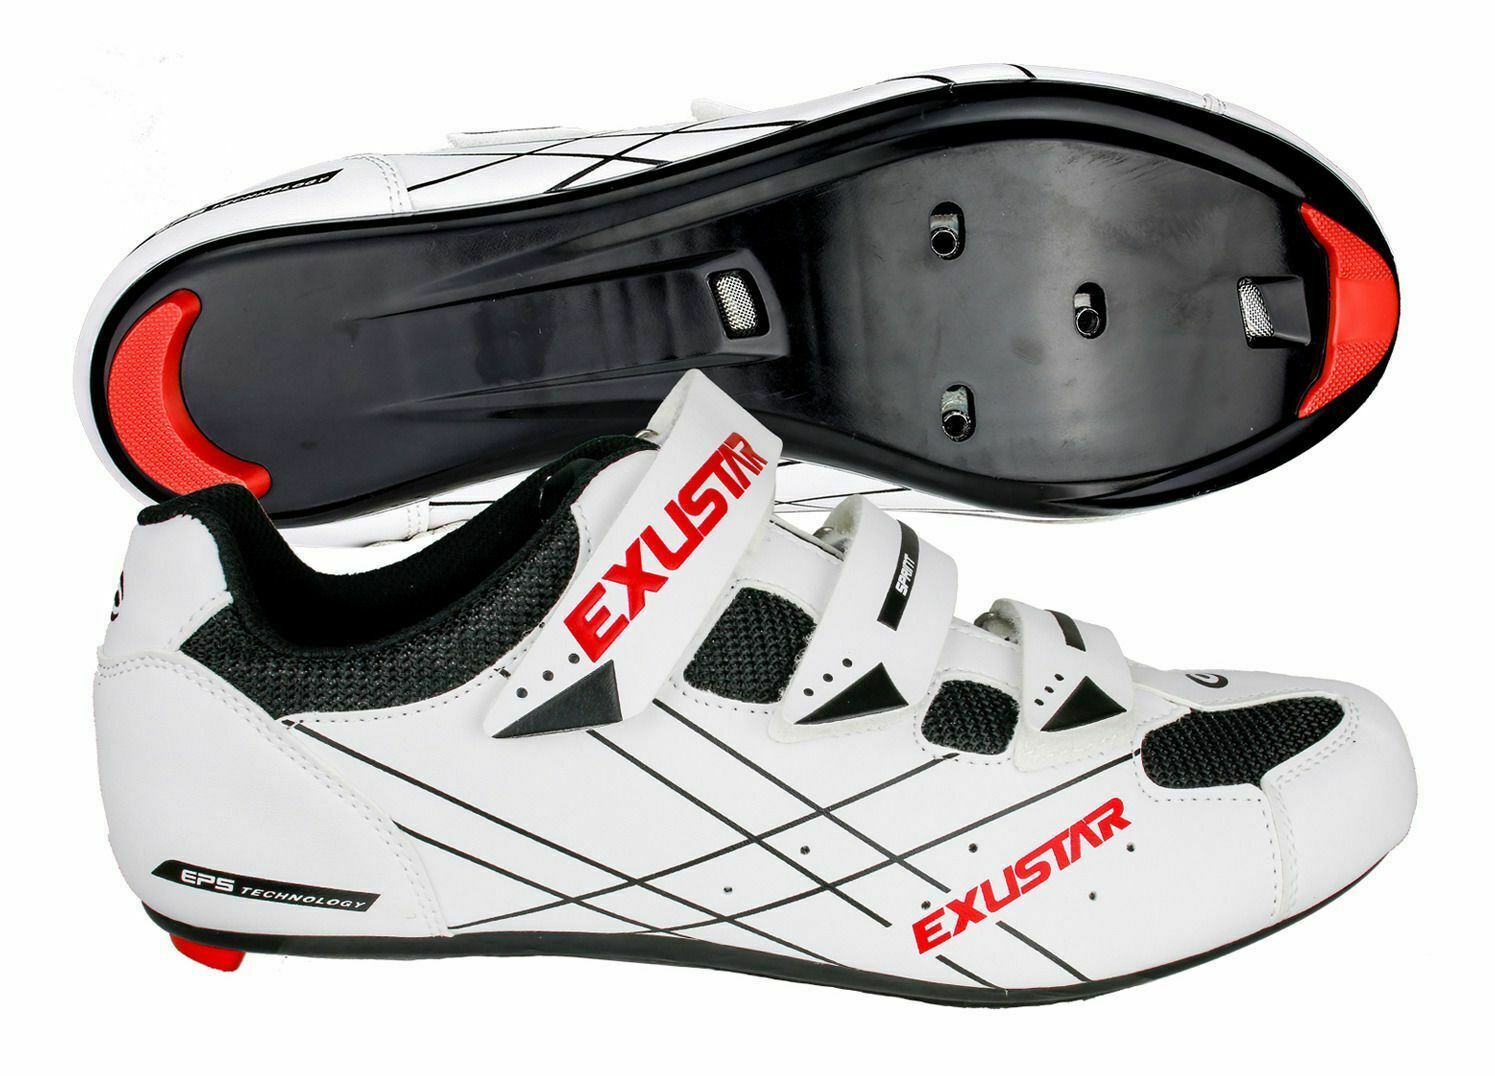 E-SR493  Road Bike Shoes Size 44